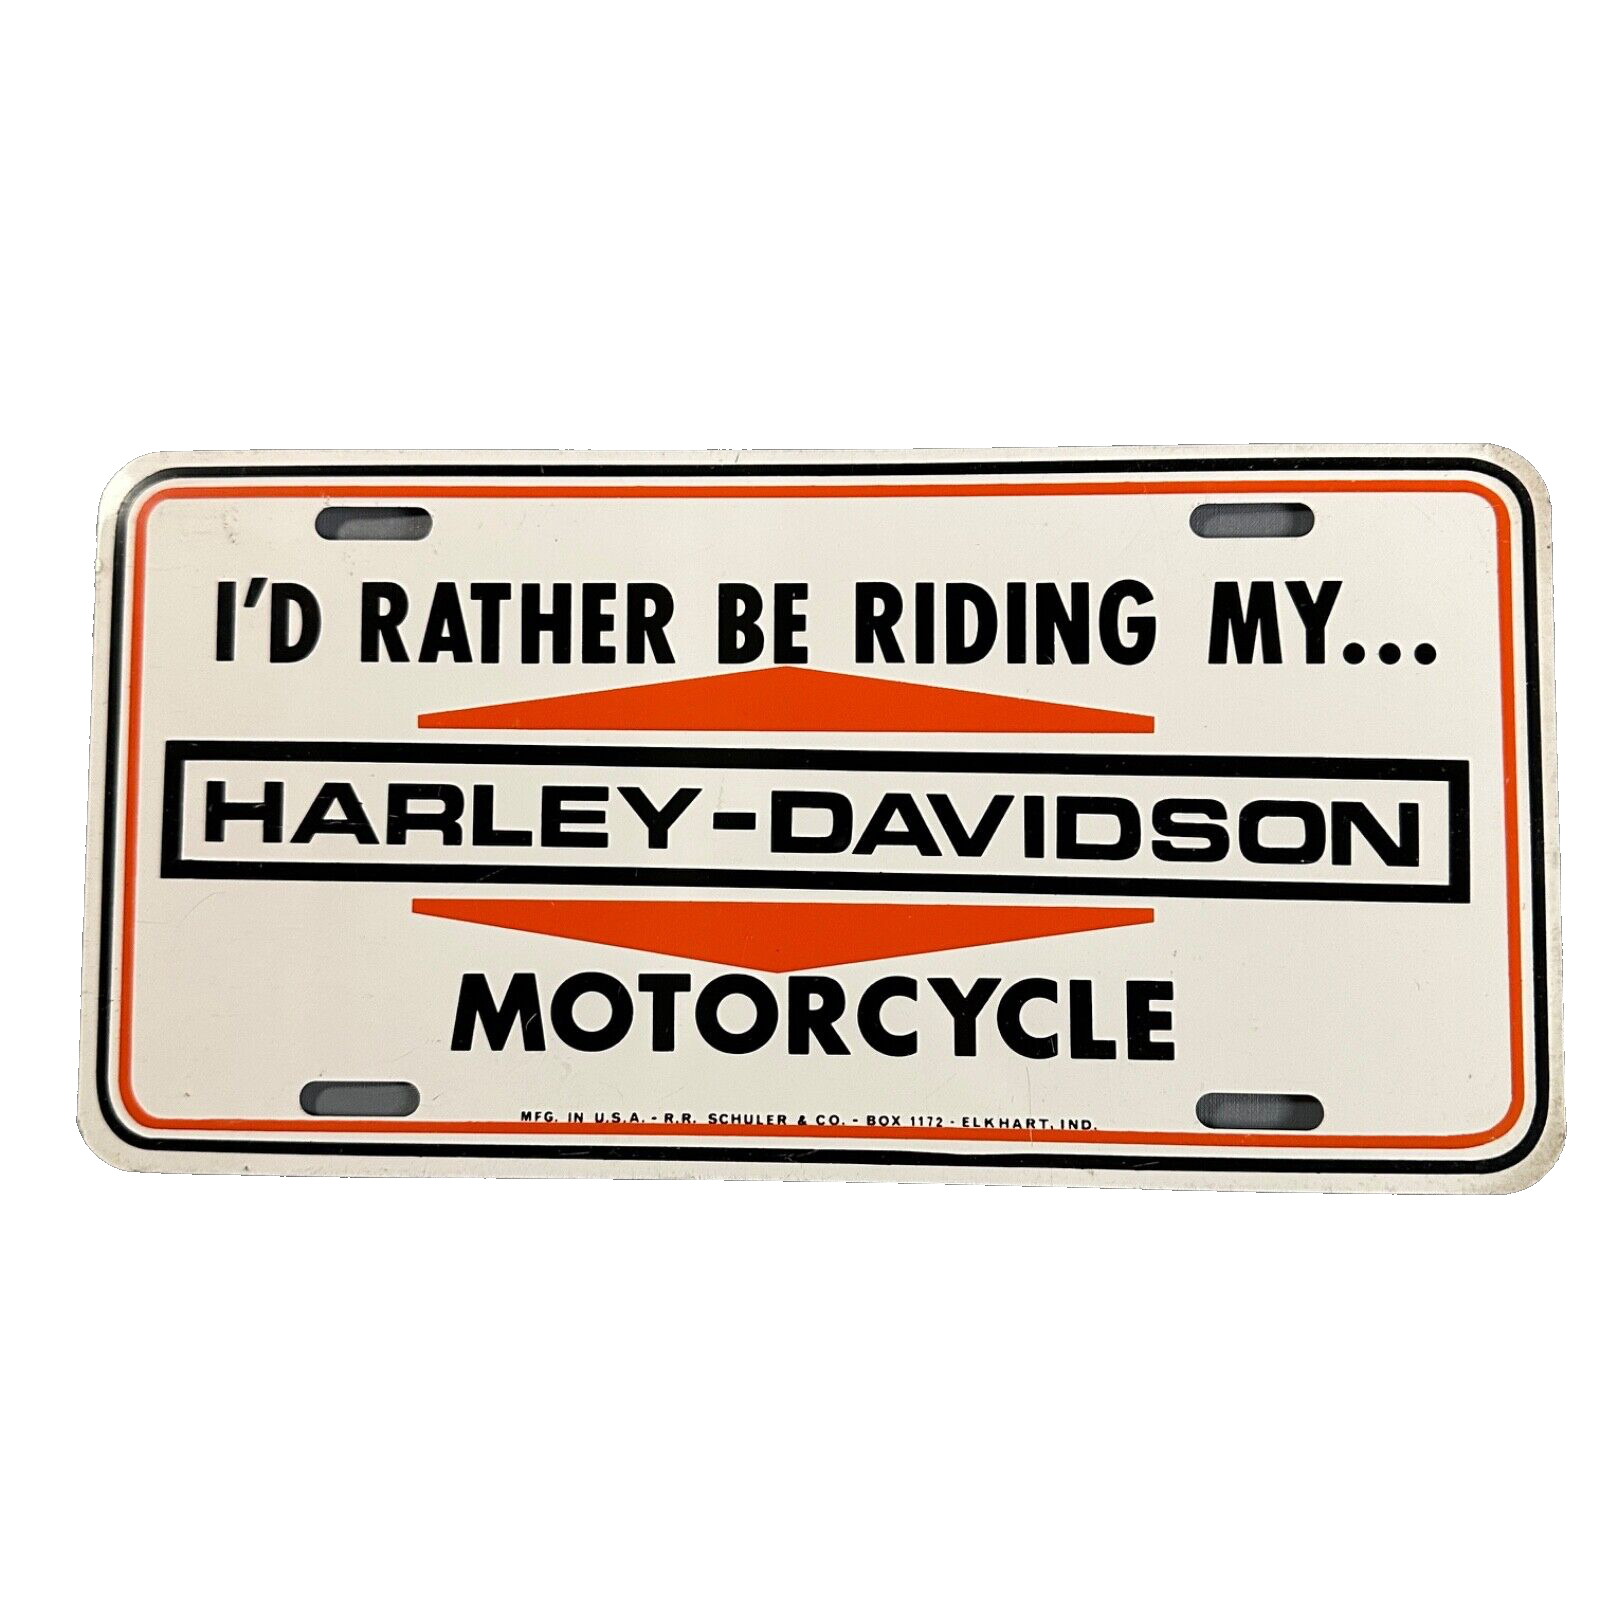 Vintage Harley Davidson Motorcycle License Plate USA Advertising Novelty 70s 80s